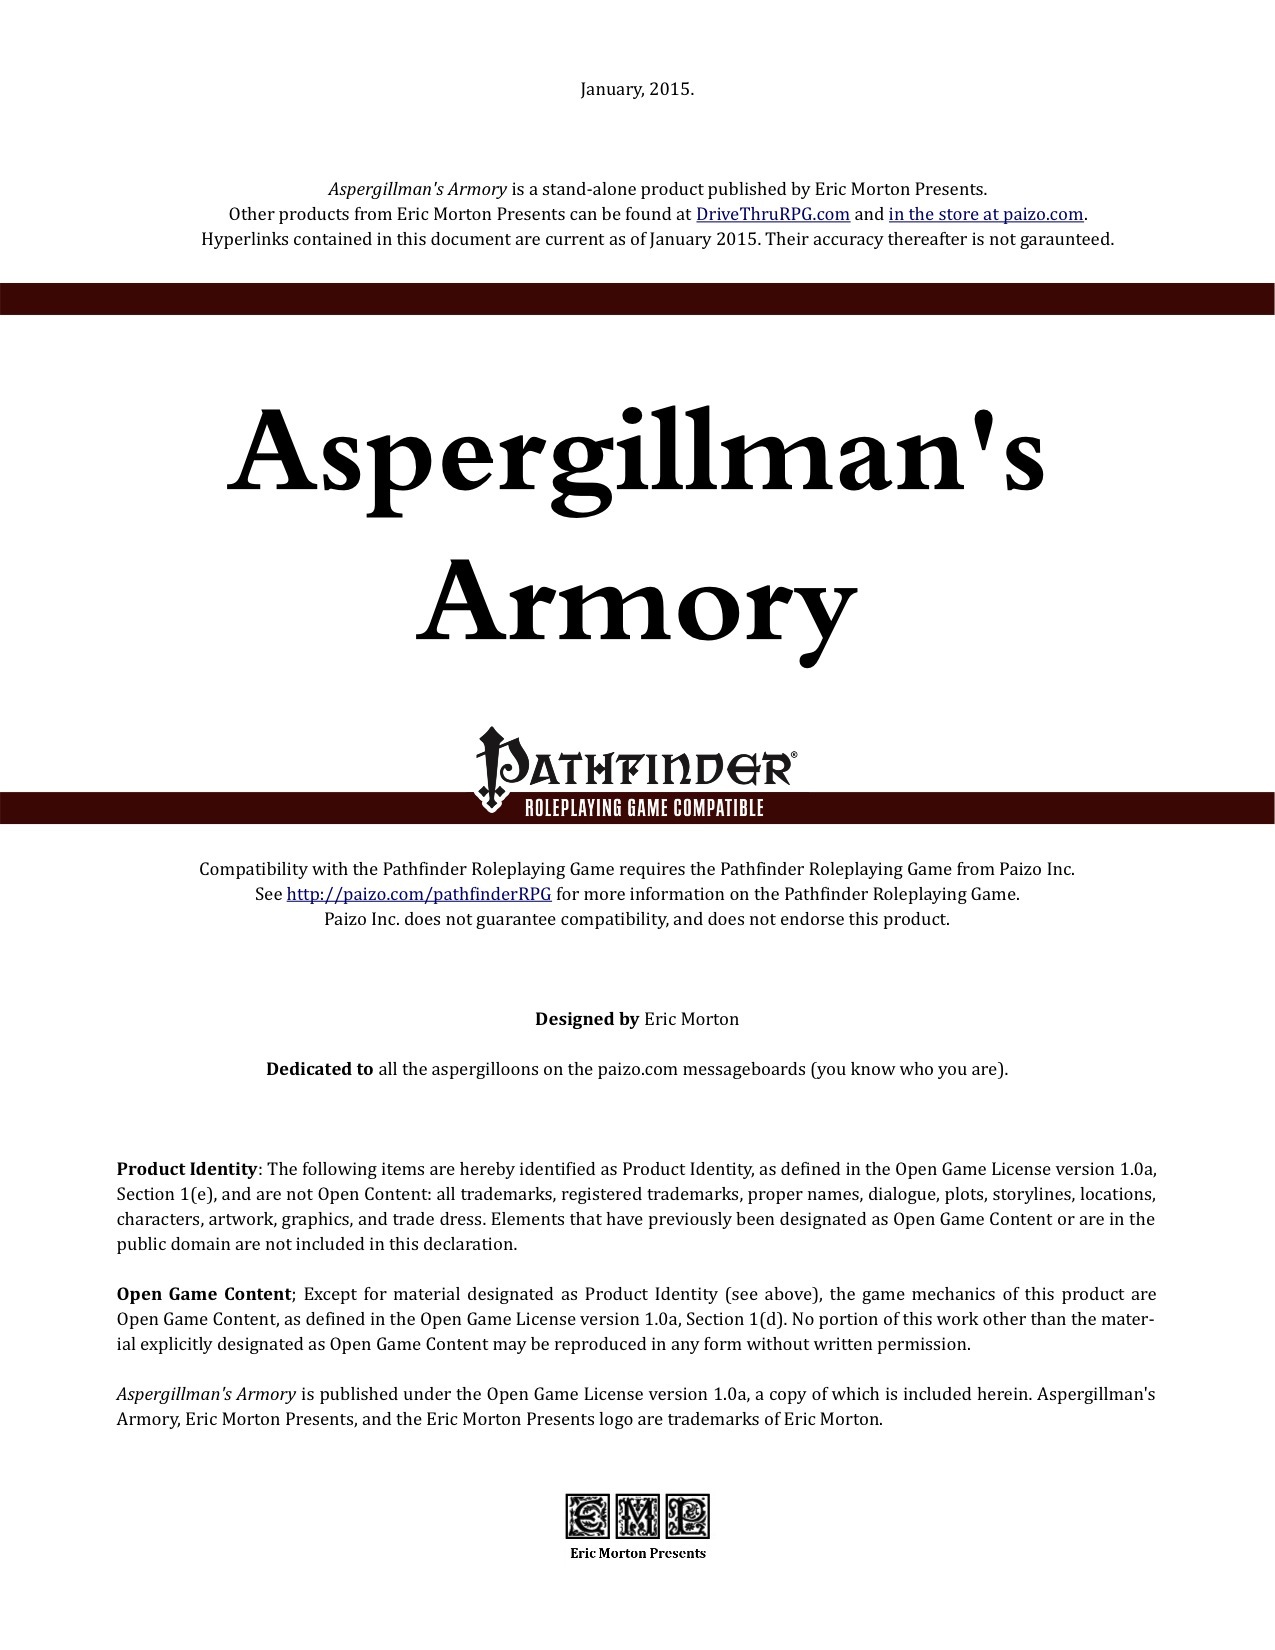 starfinder armory pdf download